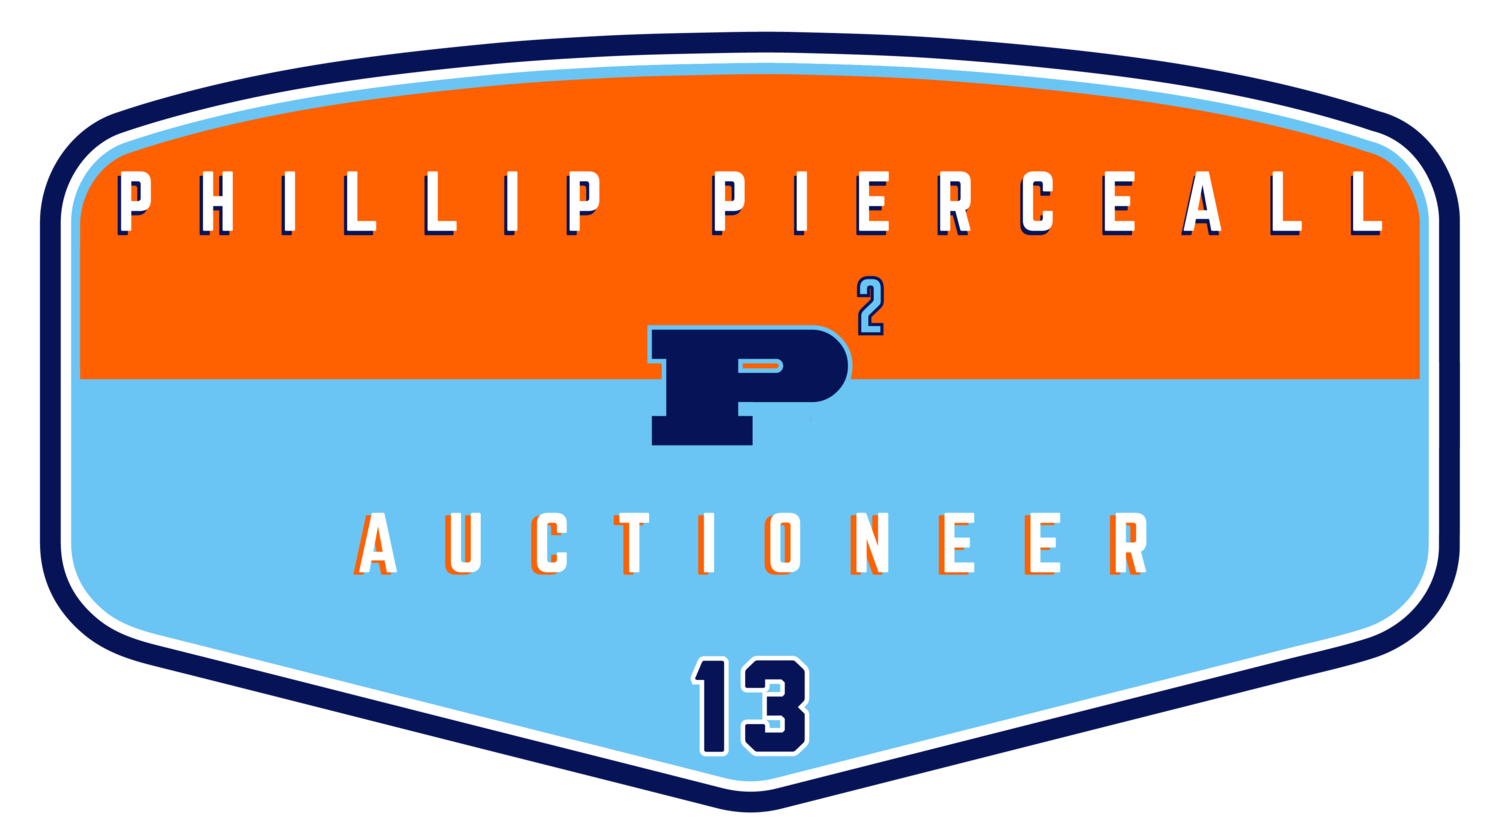 Phillip Pierceall Auctioneer